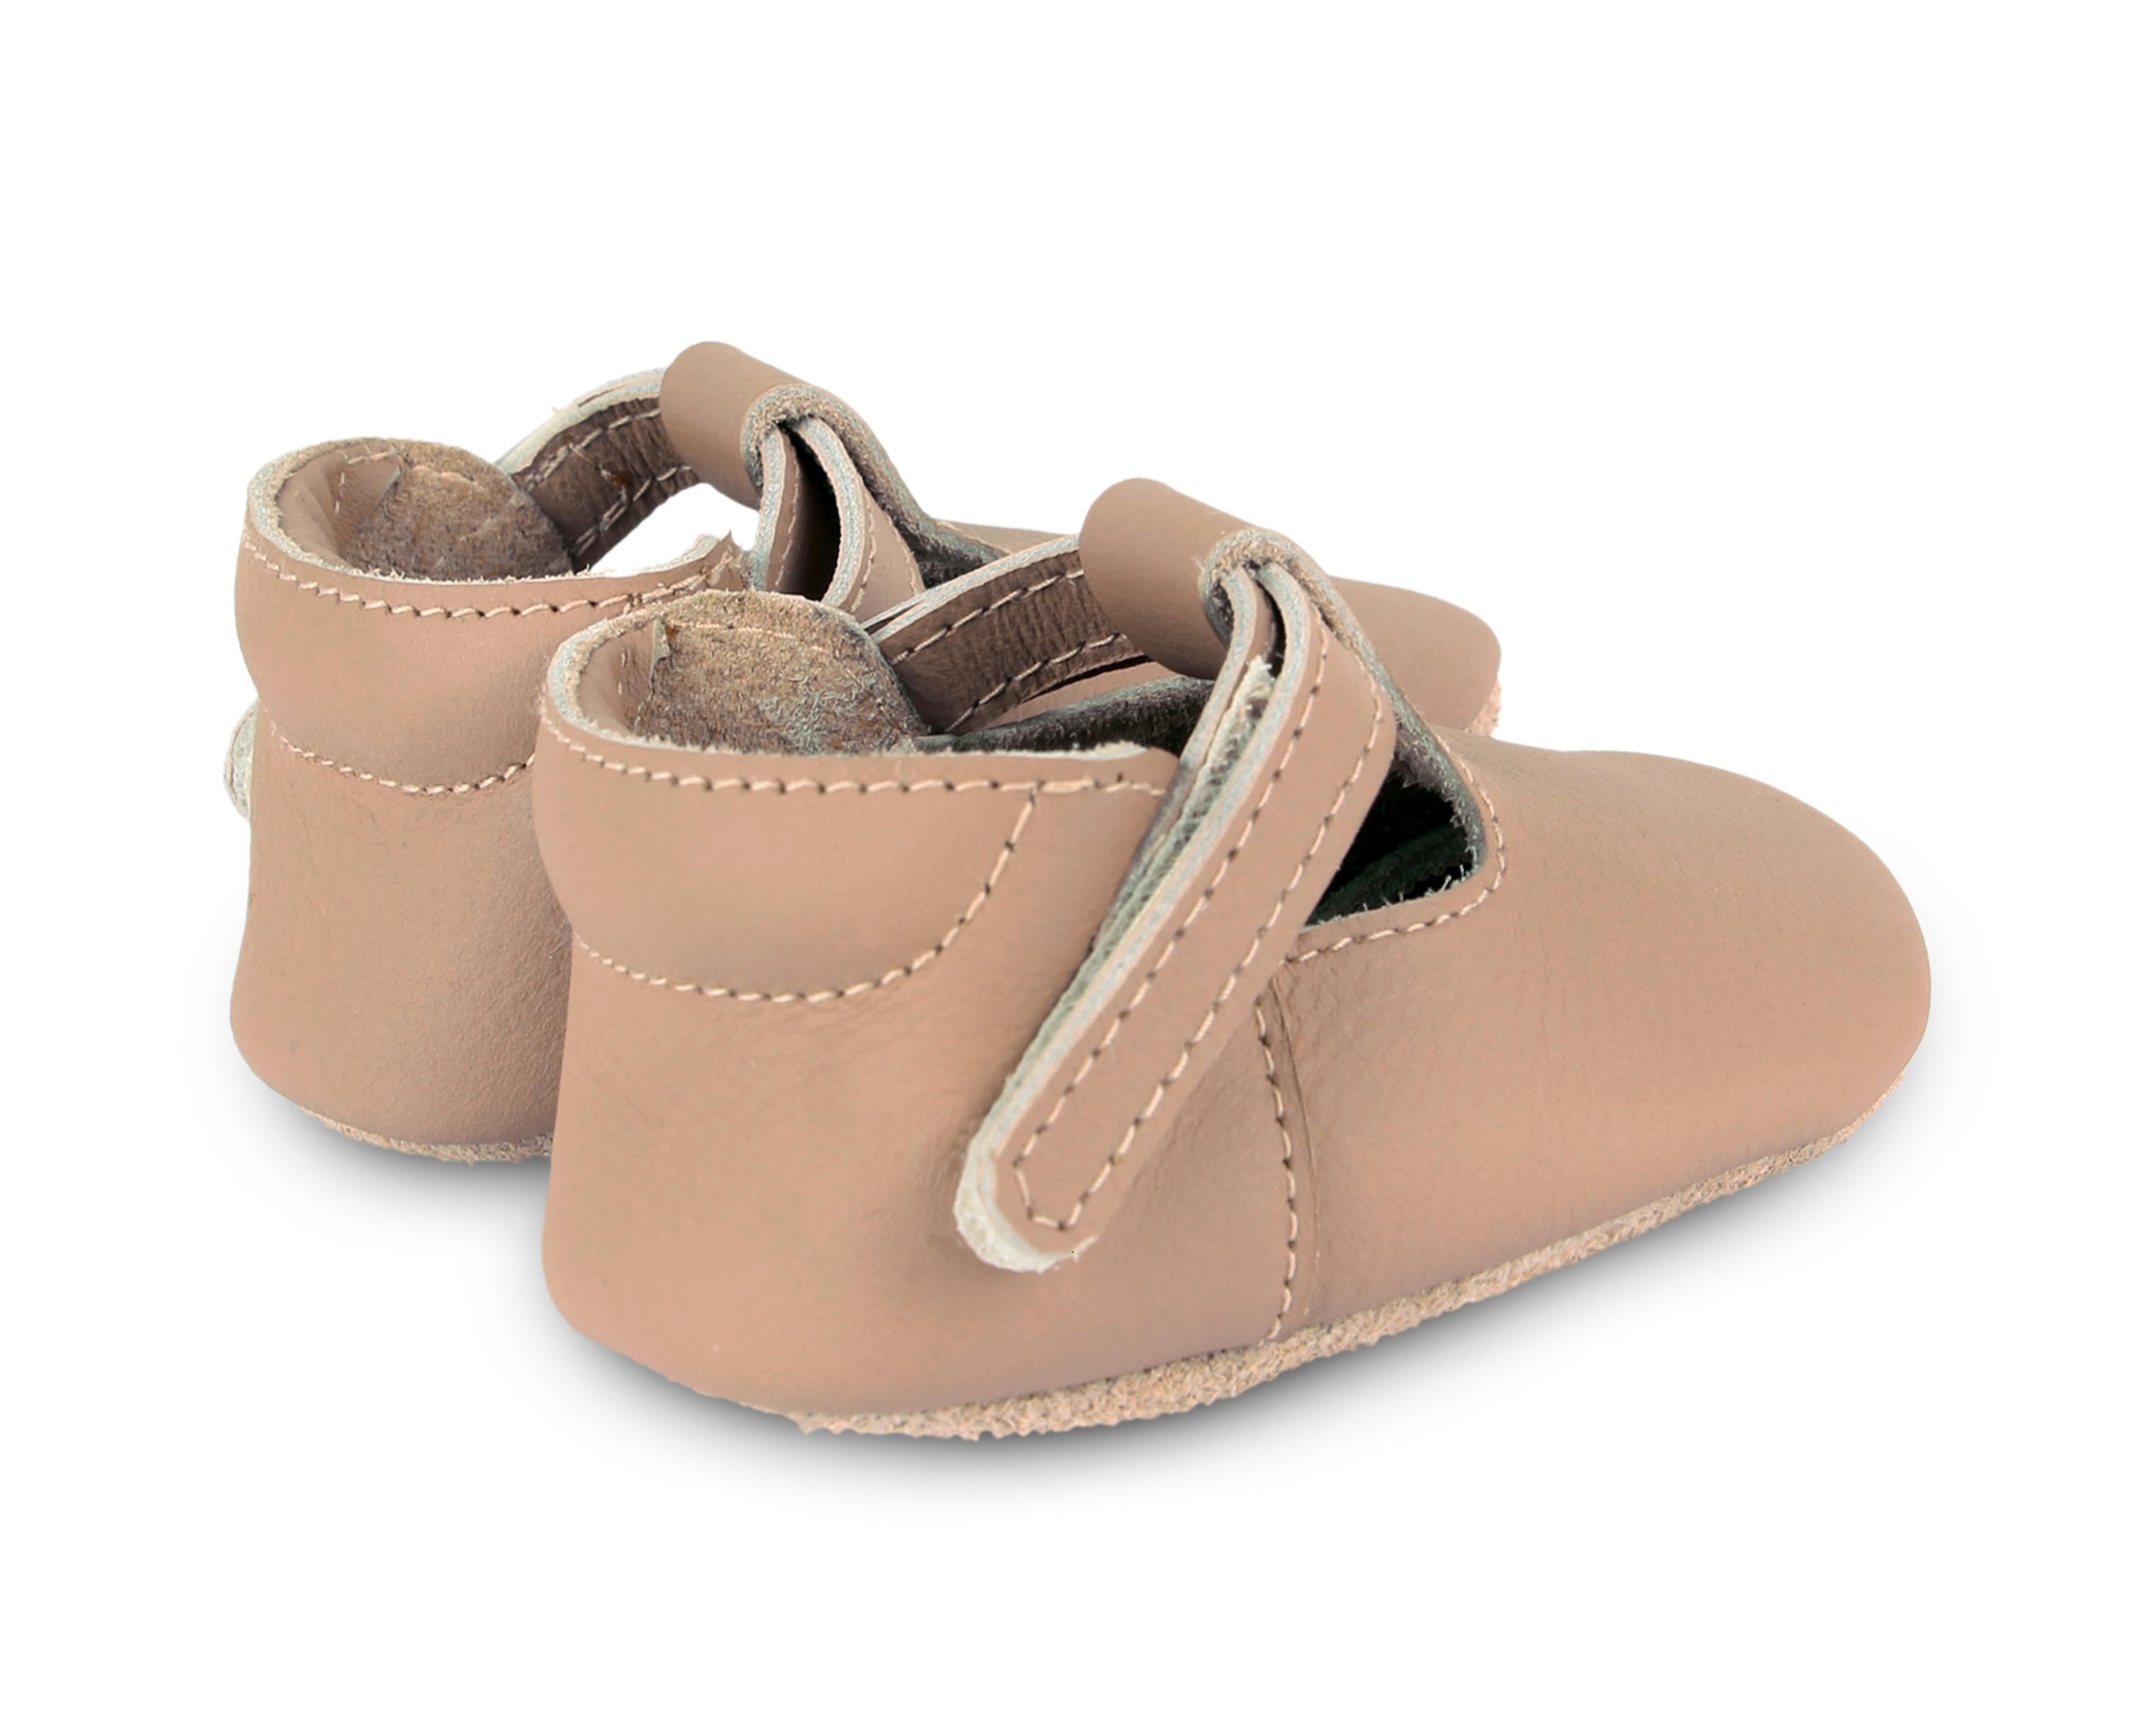 Donsje Baby Shoes Elia Leather Praline Suede Sole